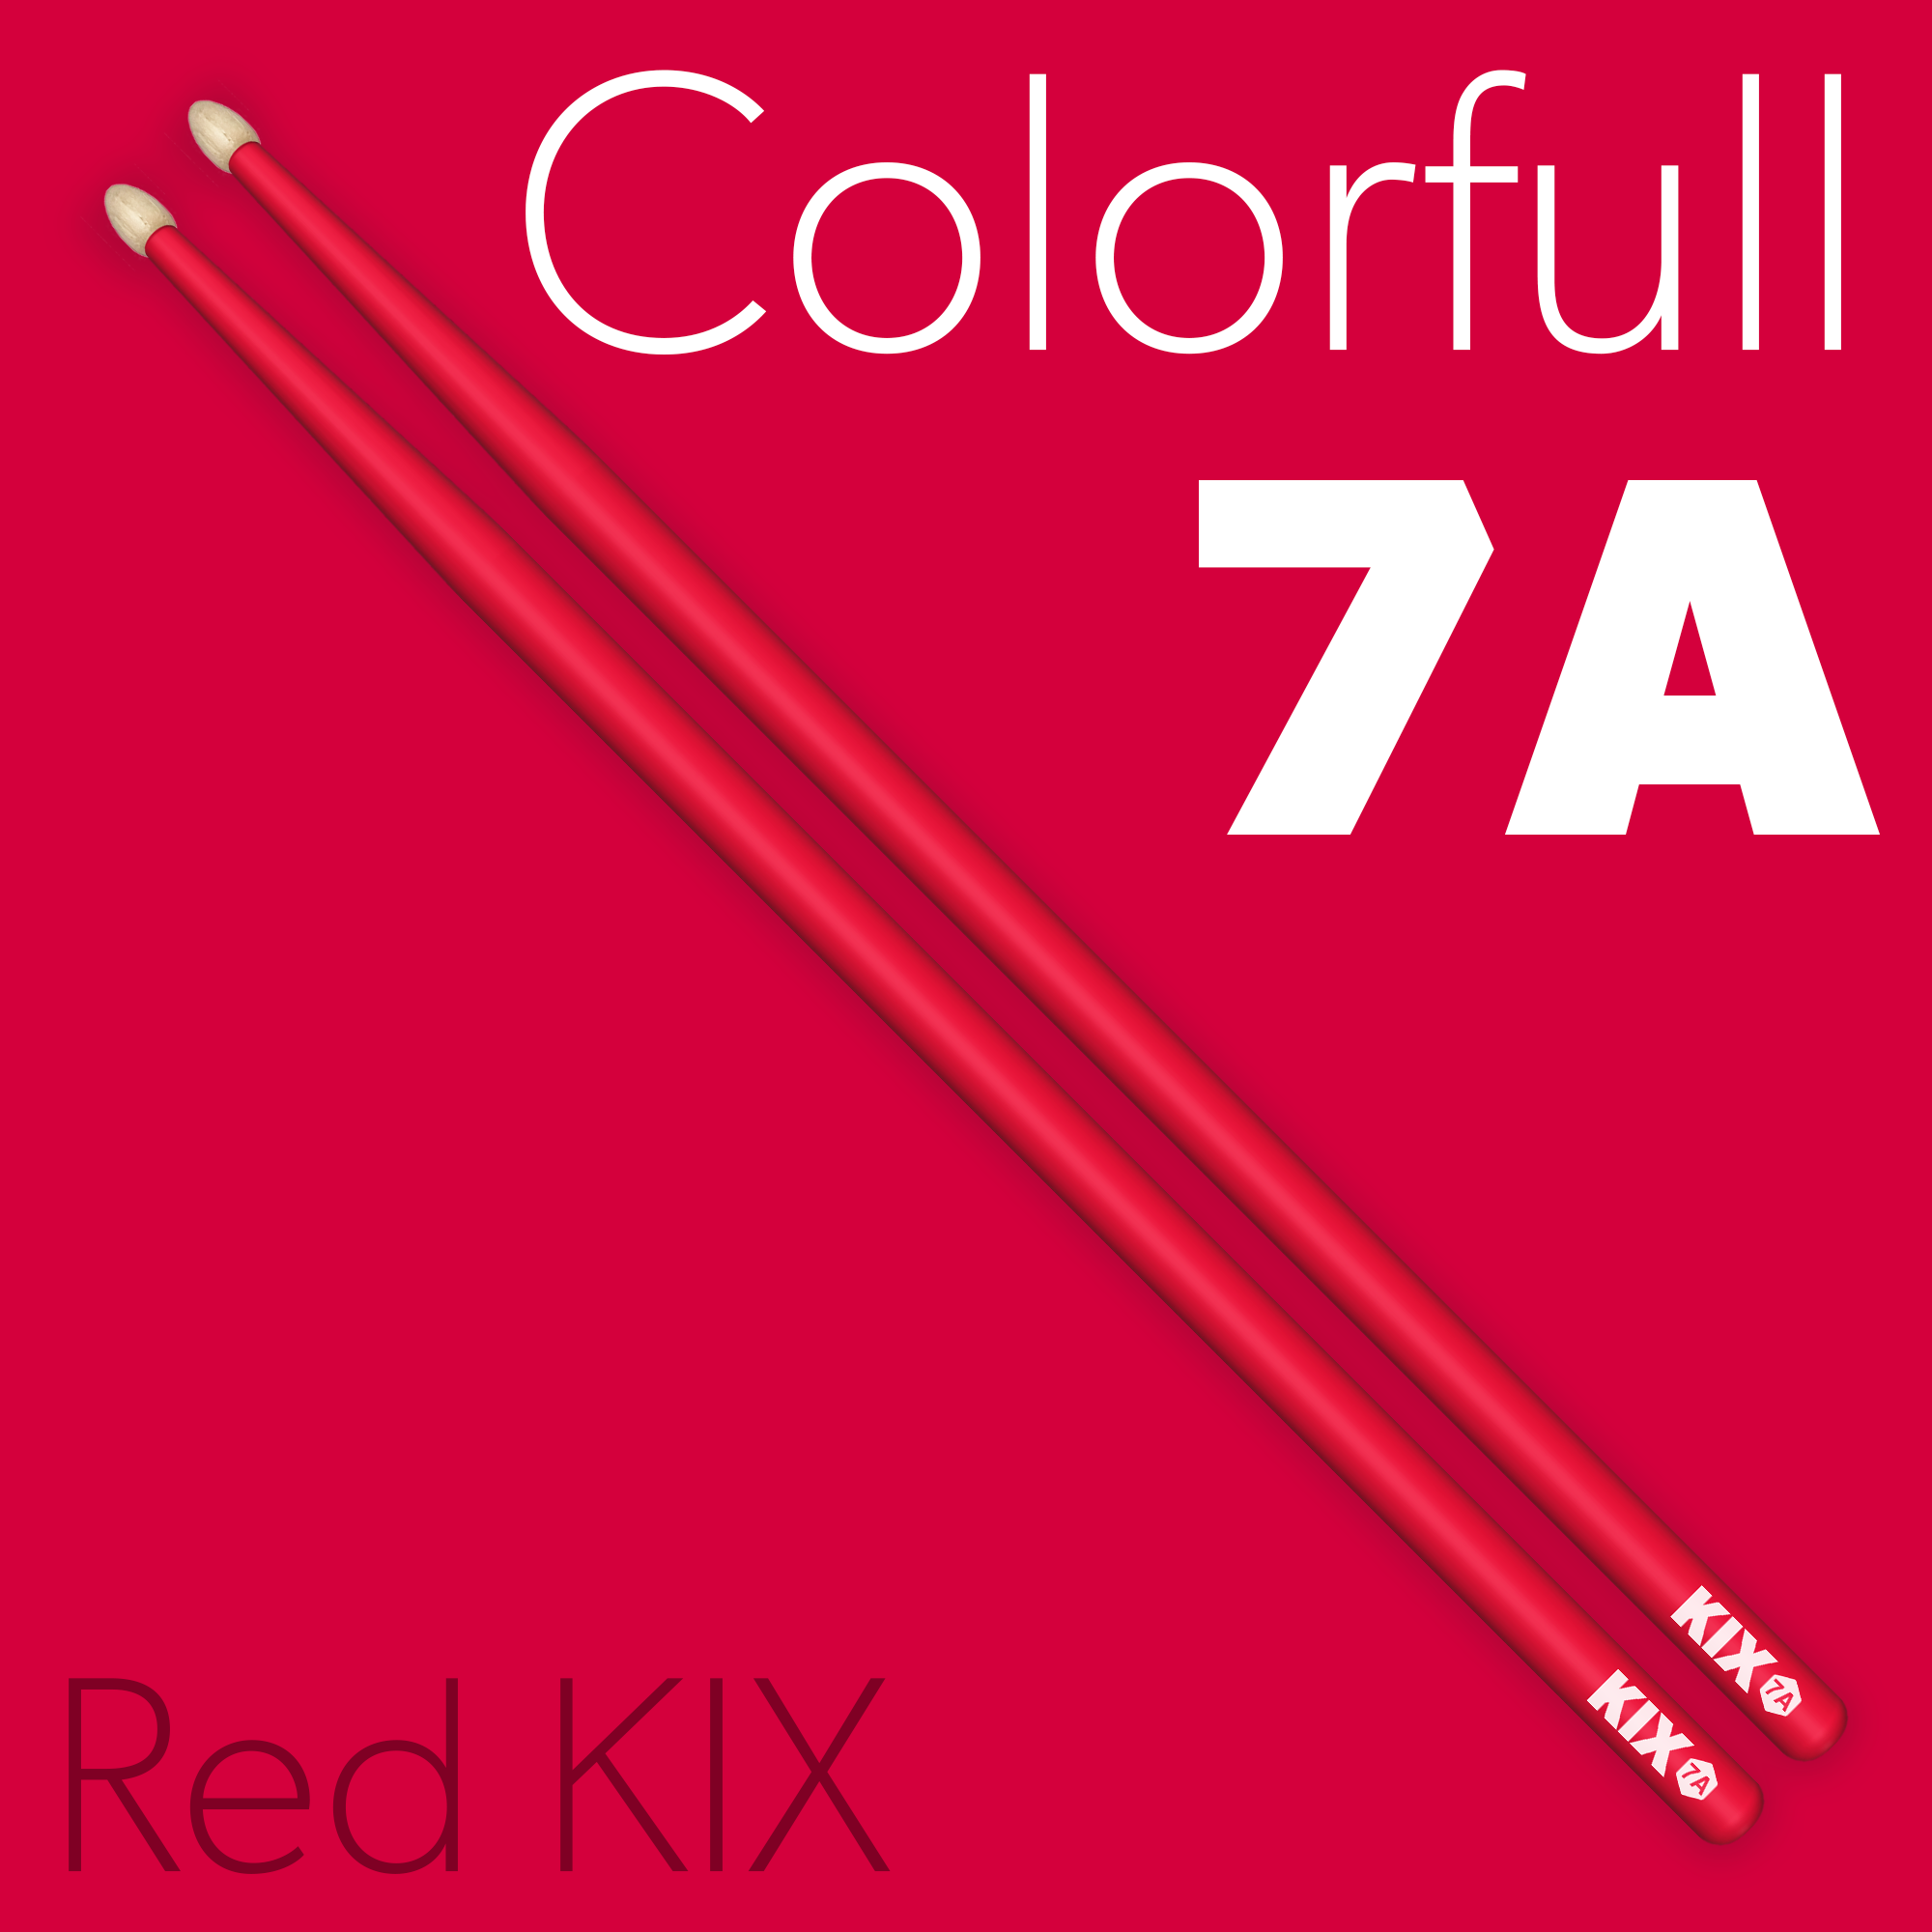 Baguettes Colorfull 7A - Red KIX